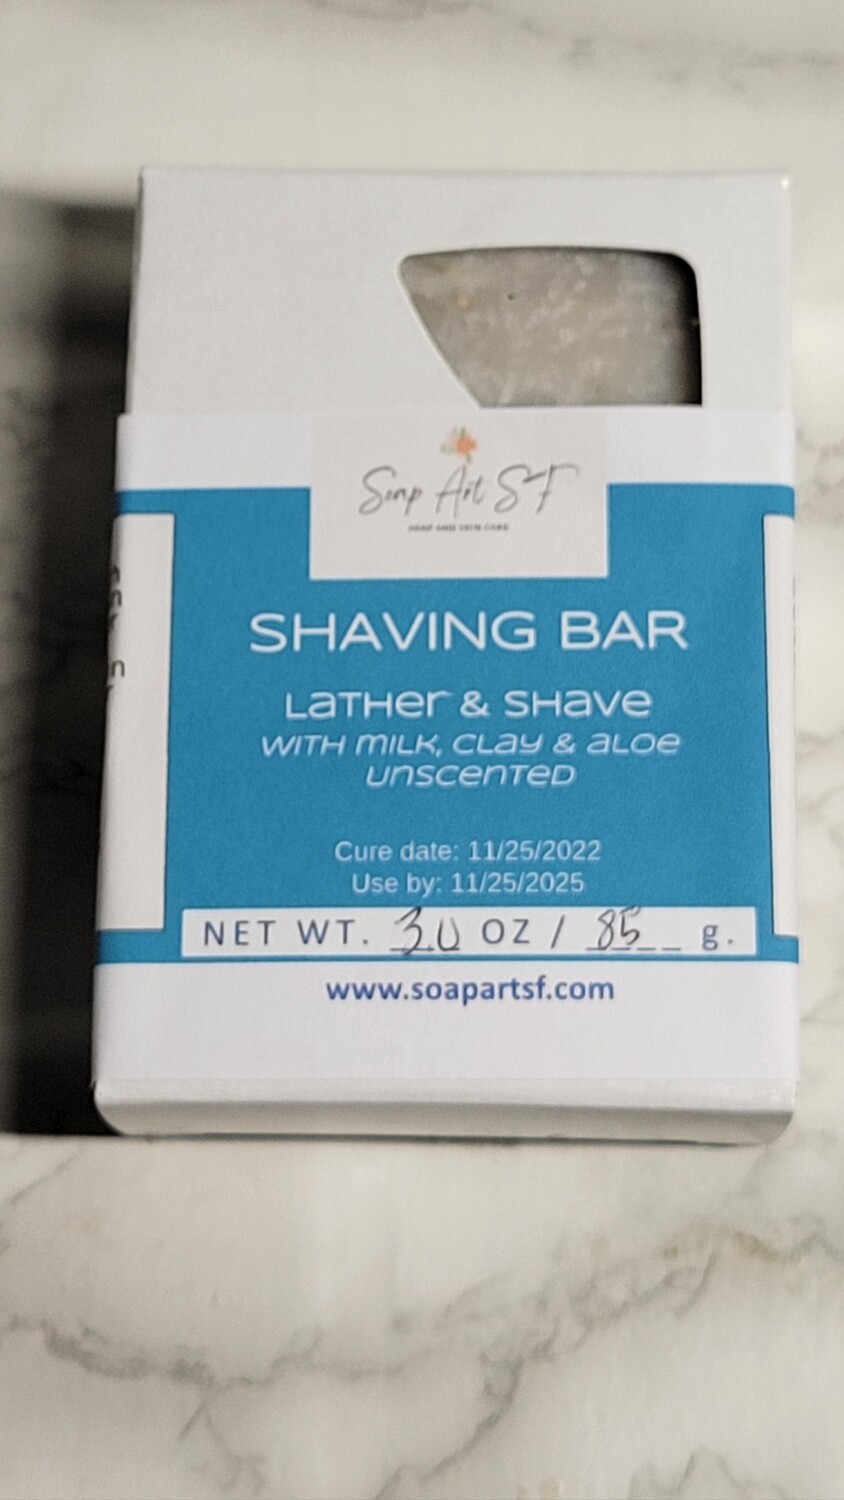 Men Shaving Soap Bar - Bentonite Clay - Unscented - Vegan - Right Soap